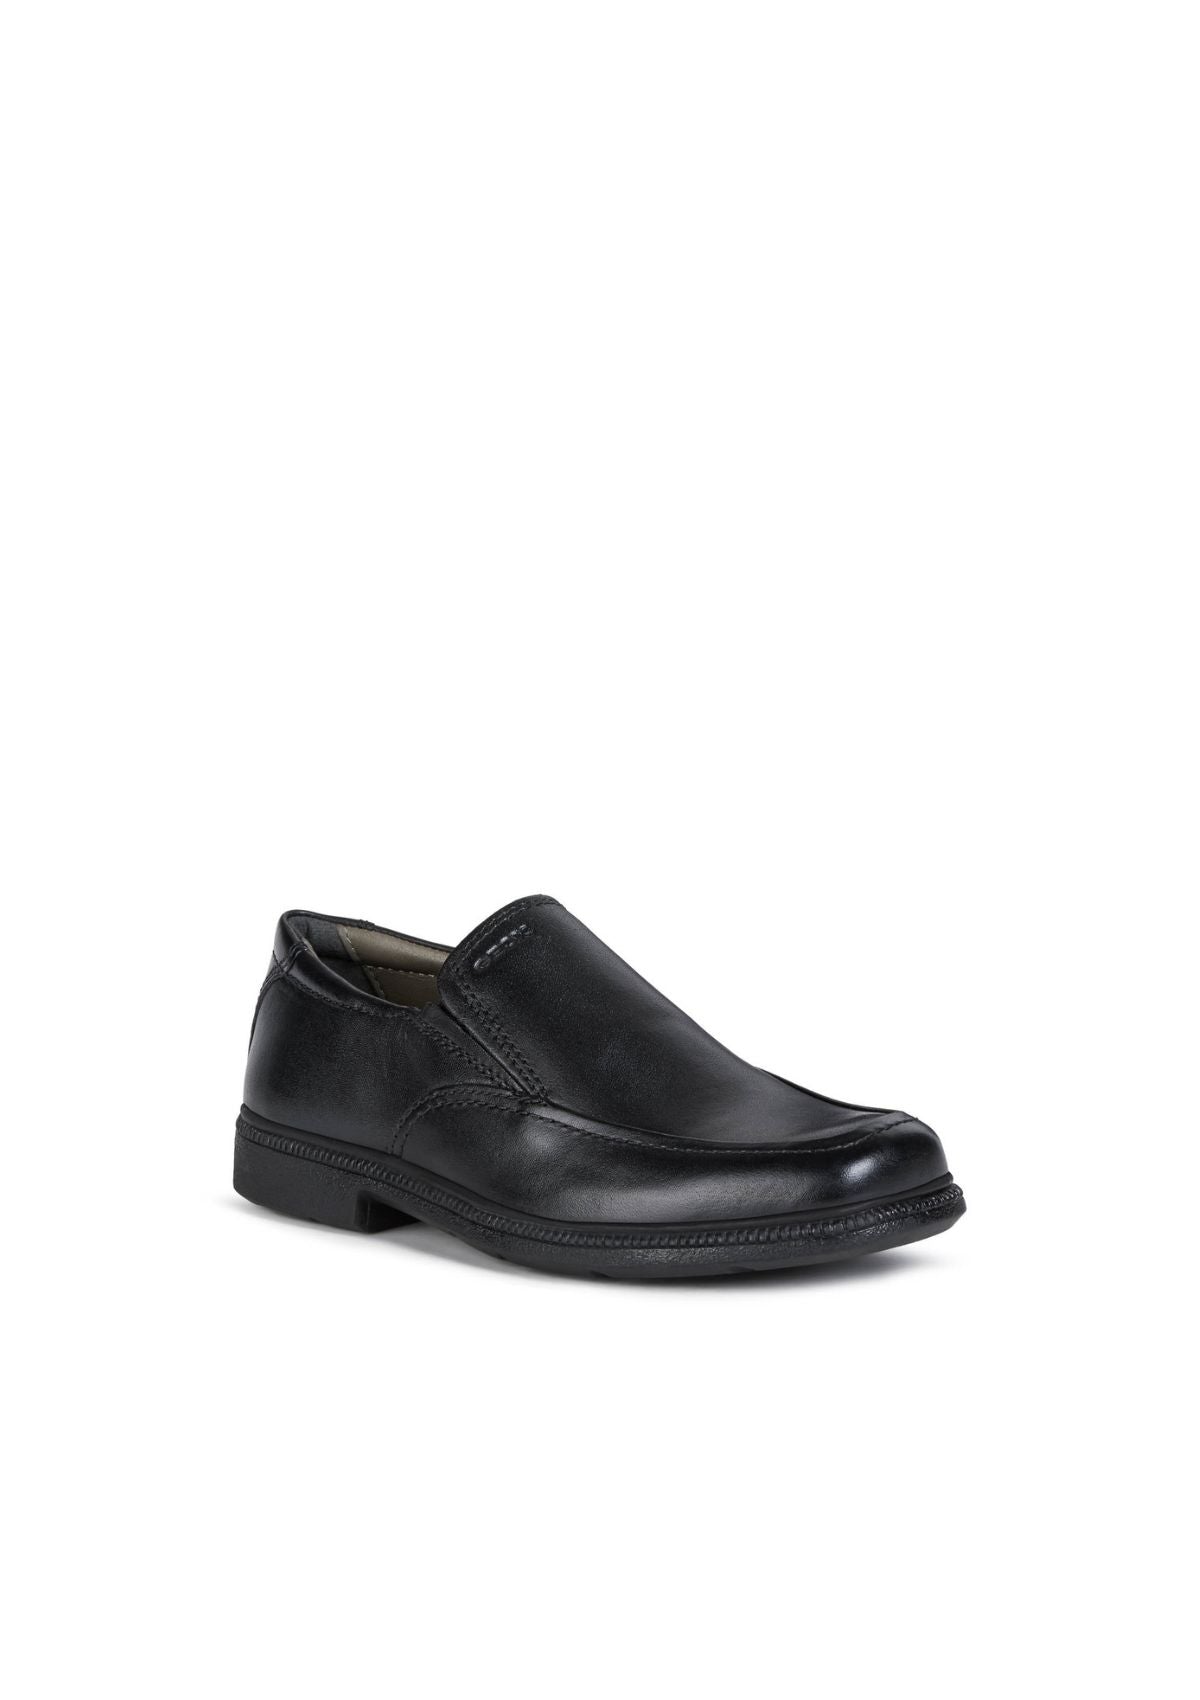 Geox Boys School Shoes FEDERICO Slip-On Black side